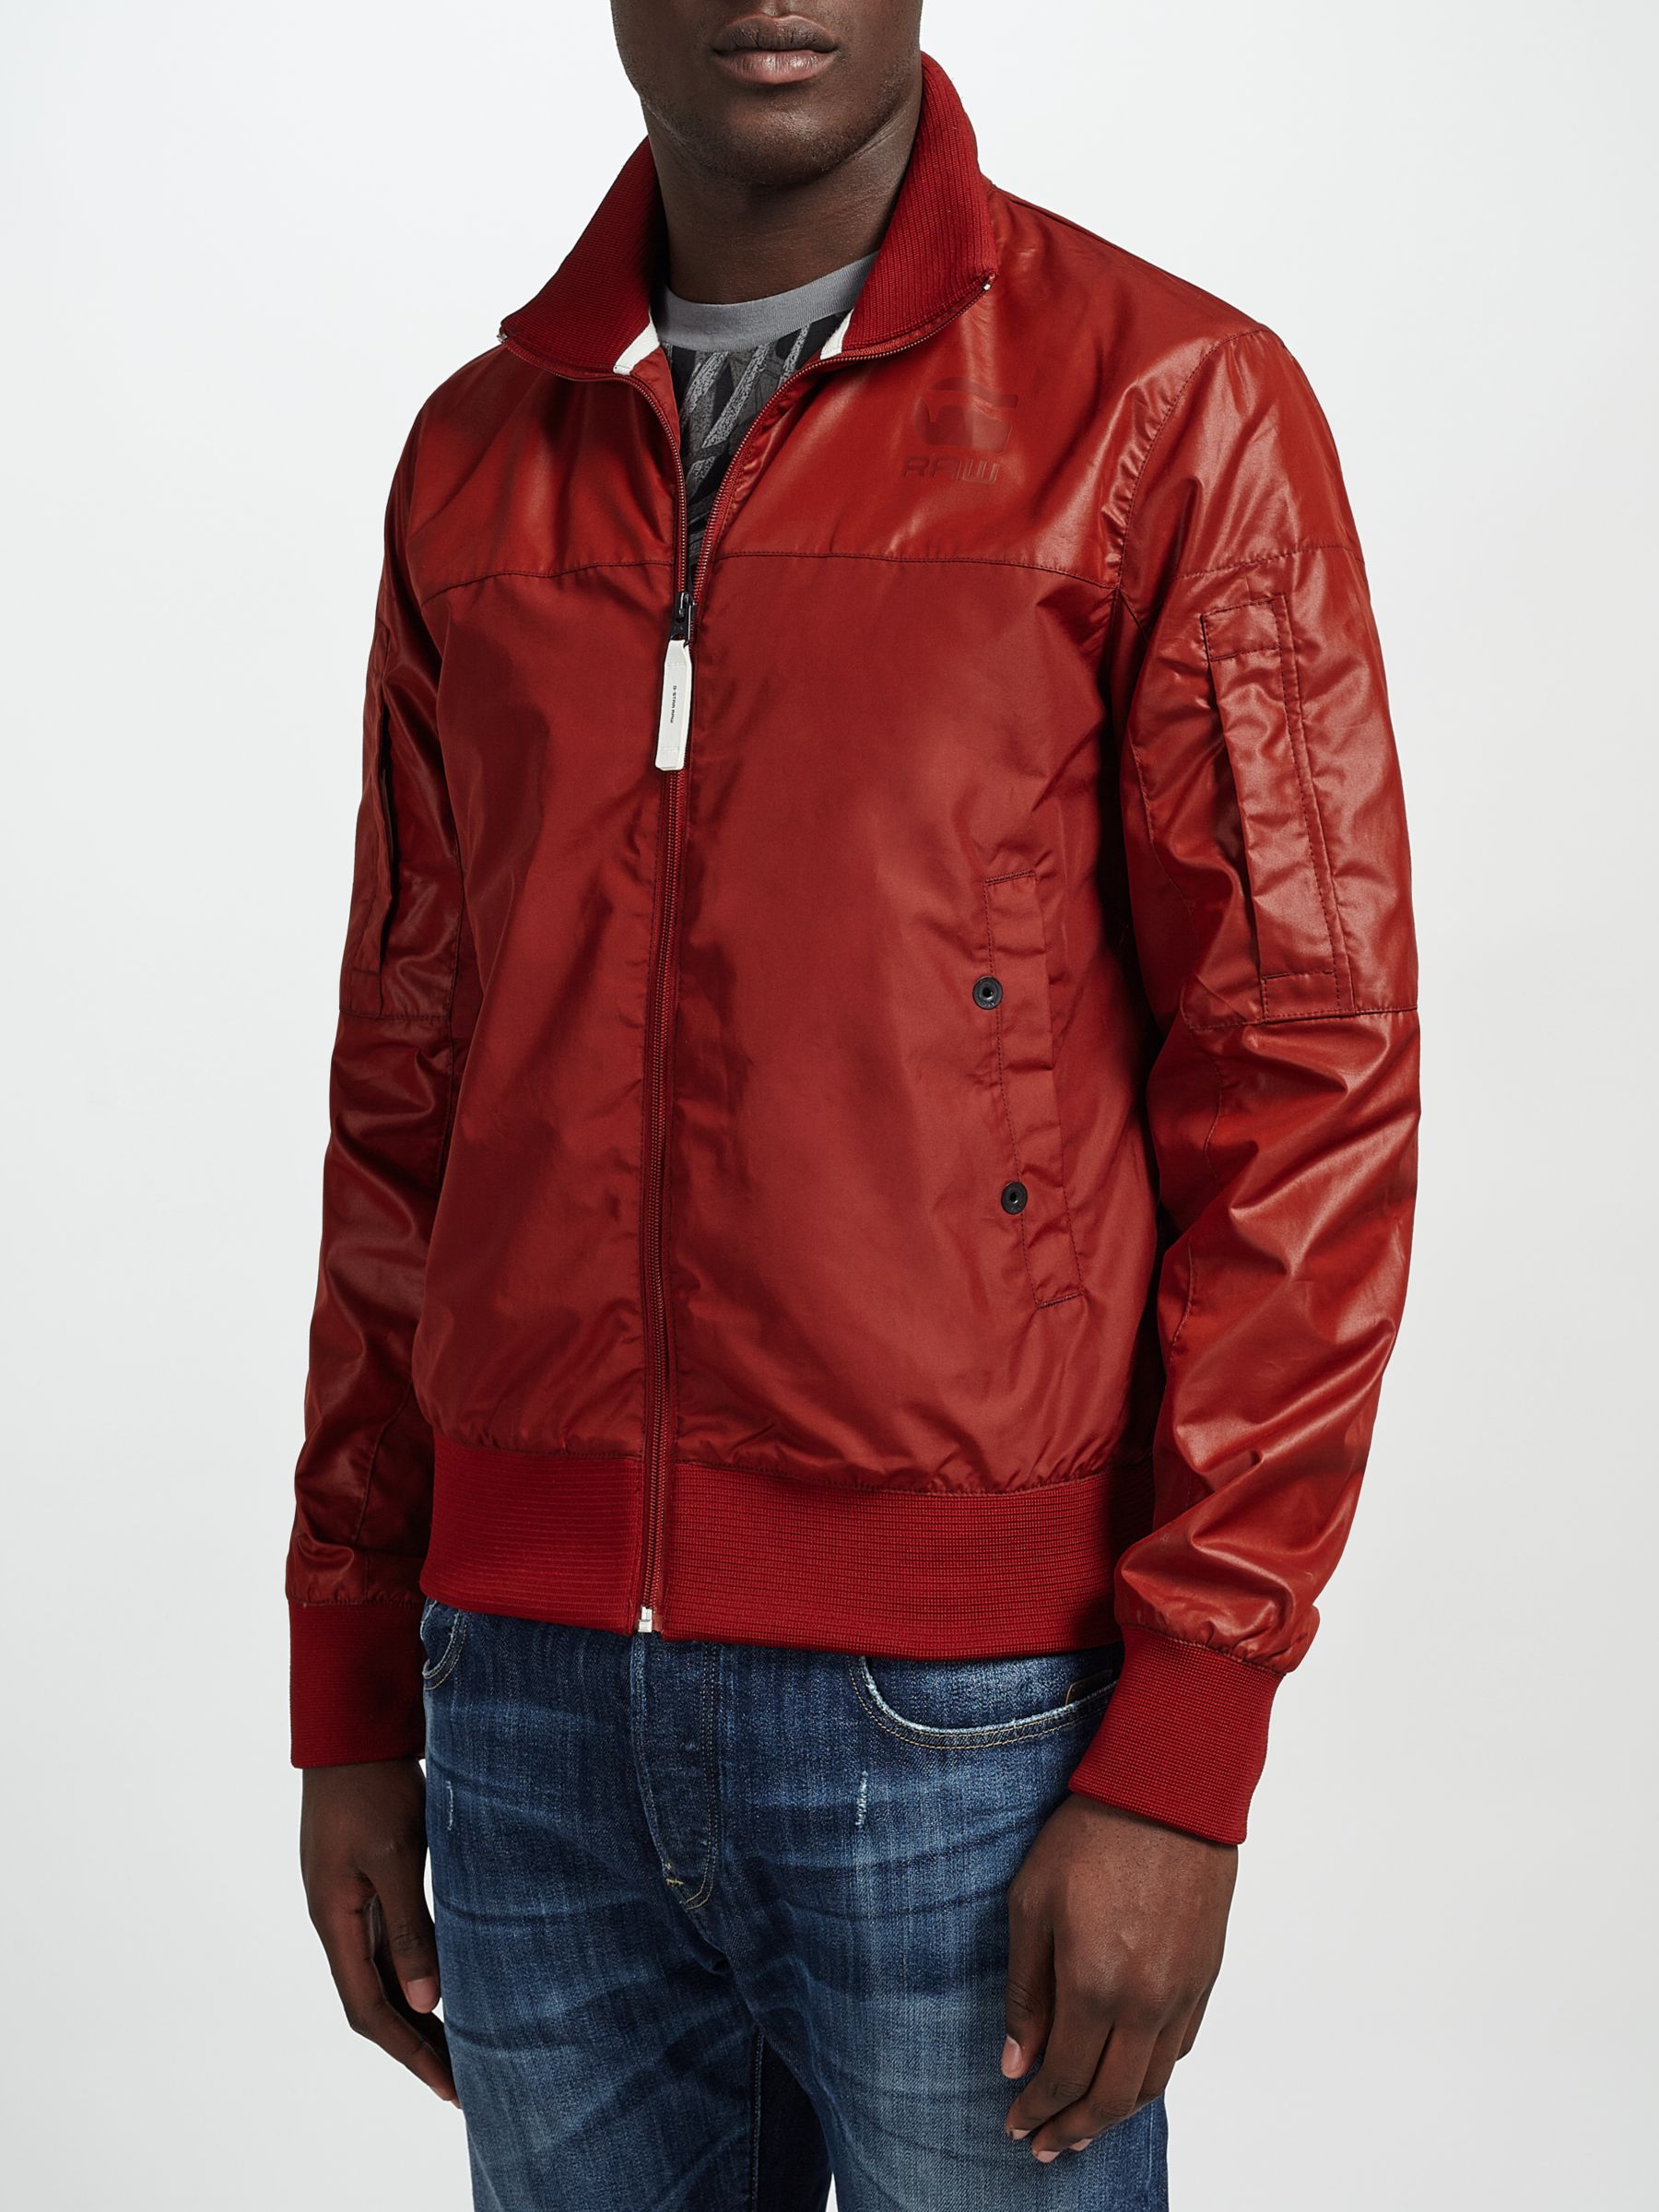 g star raw red jacket